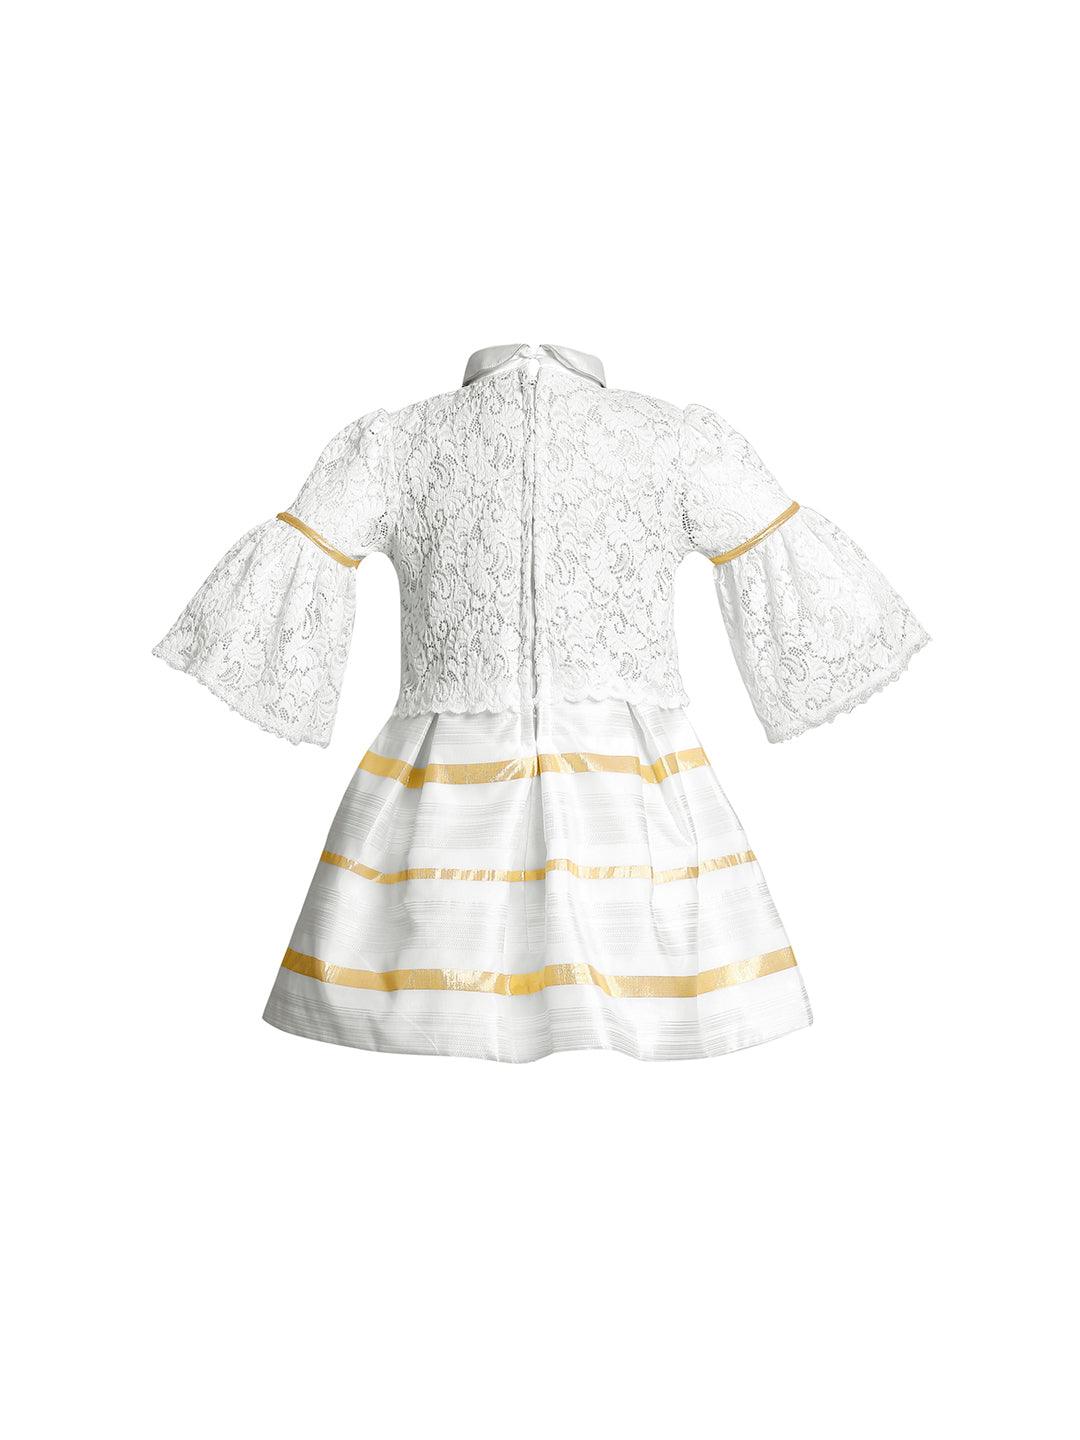 Tiny Baby White Coloured Dress - 1872 - TINY BABY INDIA shop.tinybaby.in